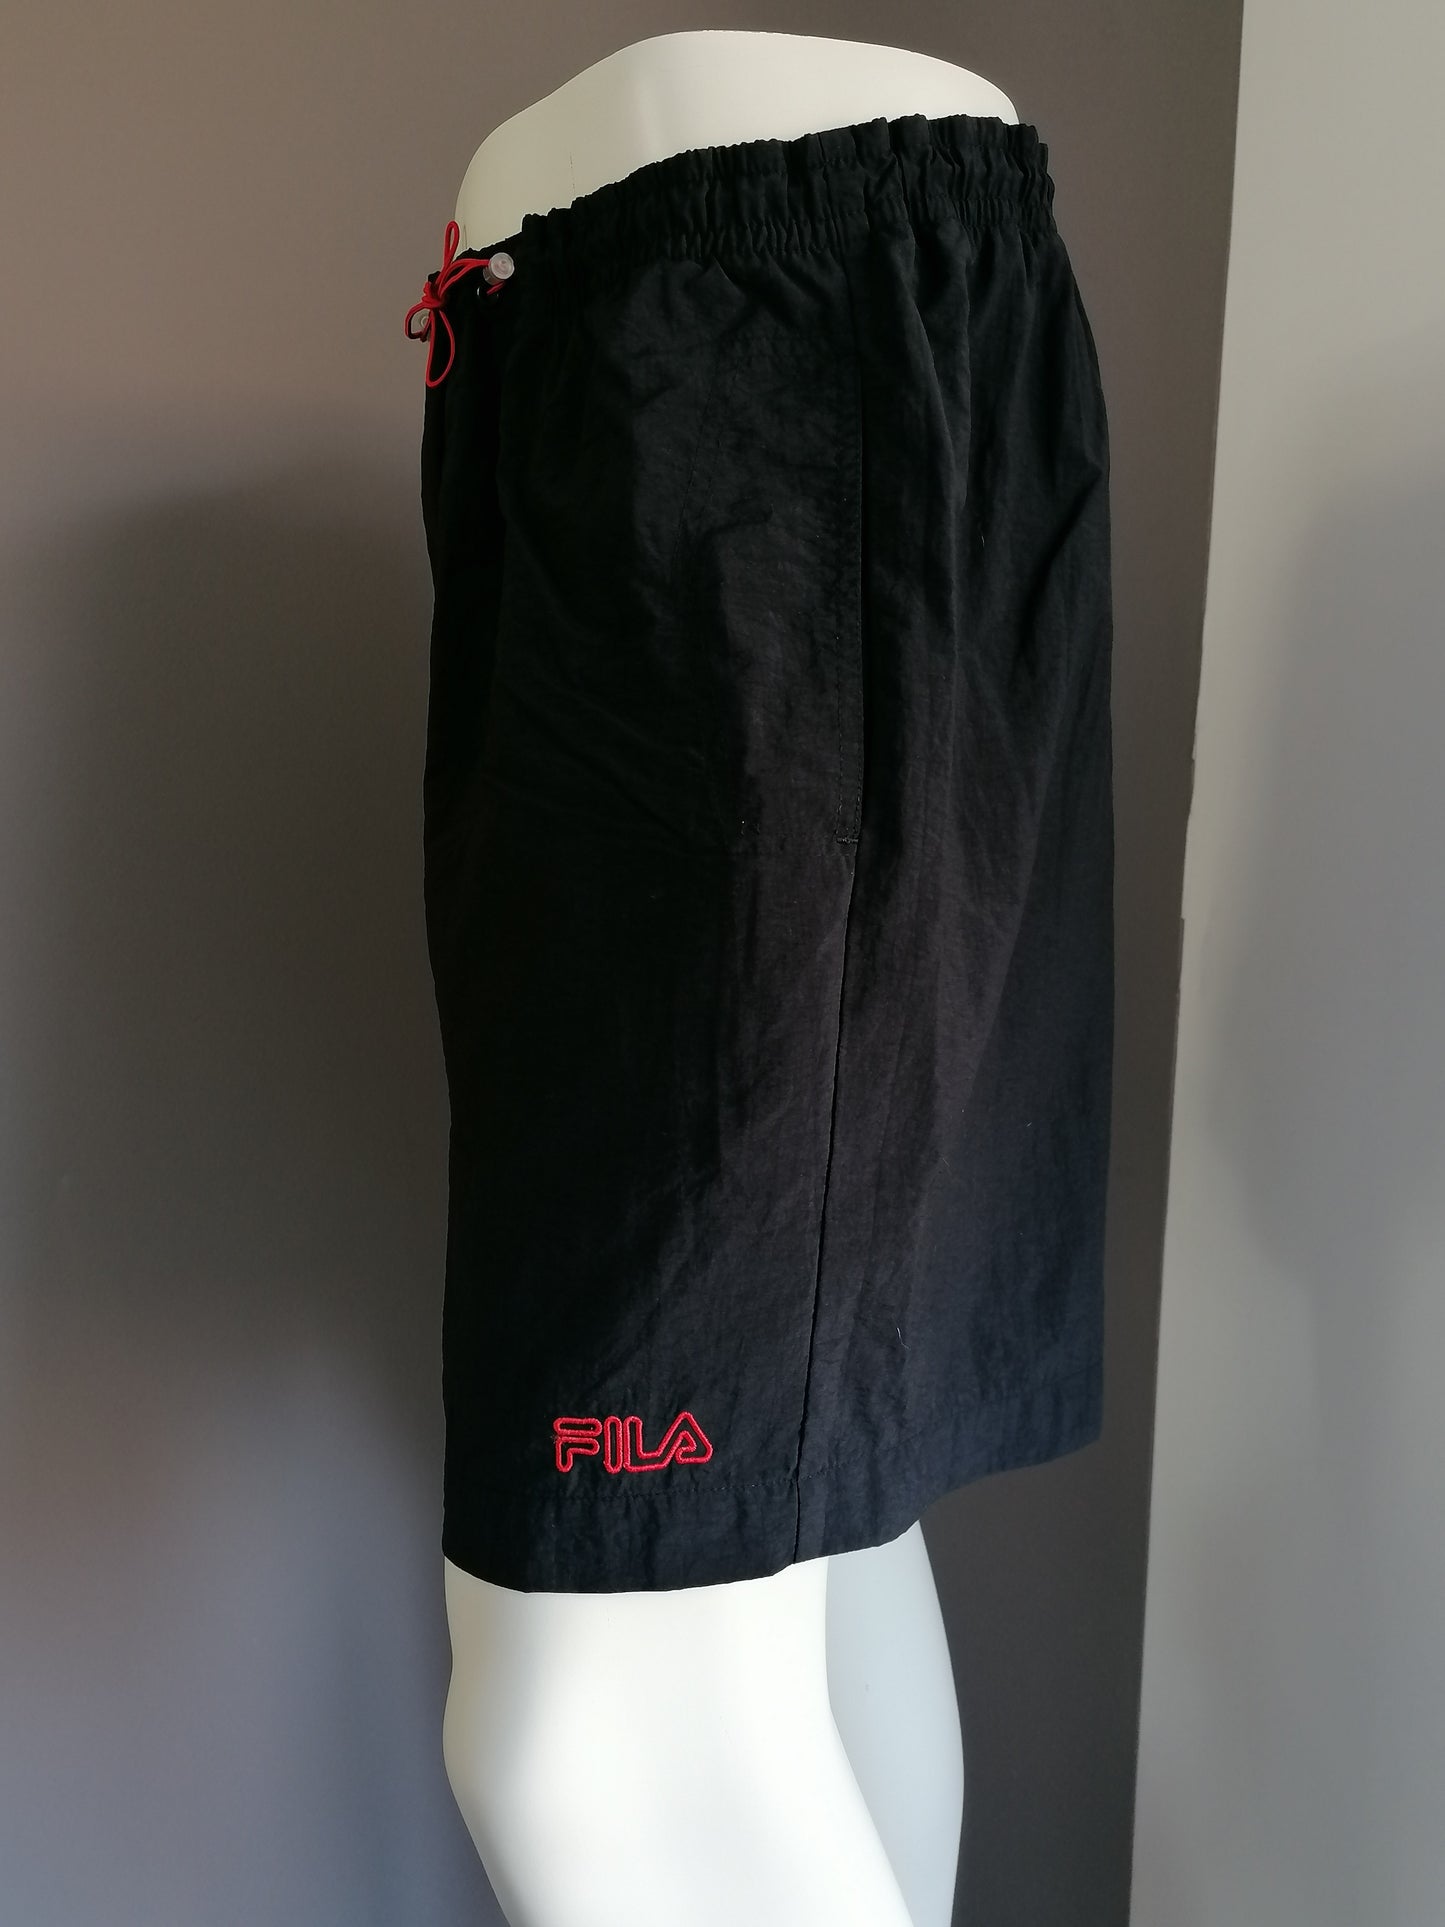 Fila swimming trunks. Colored black. Size XL.